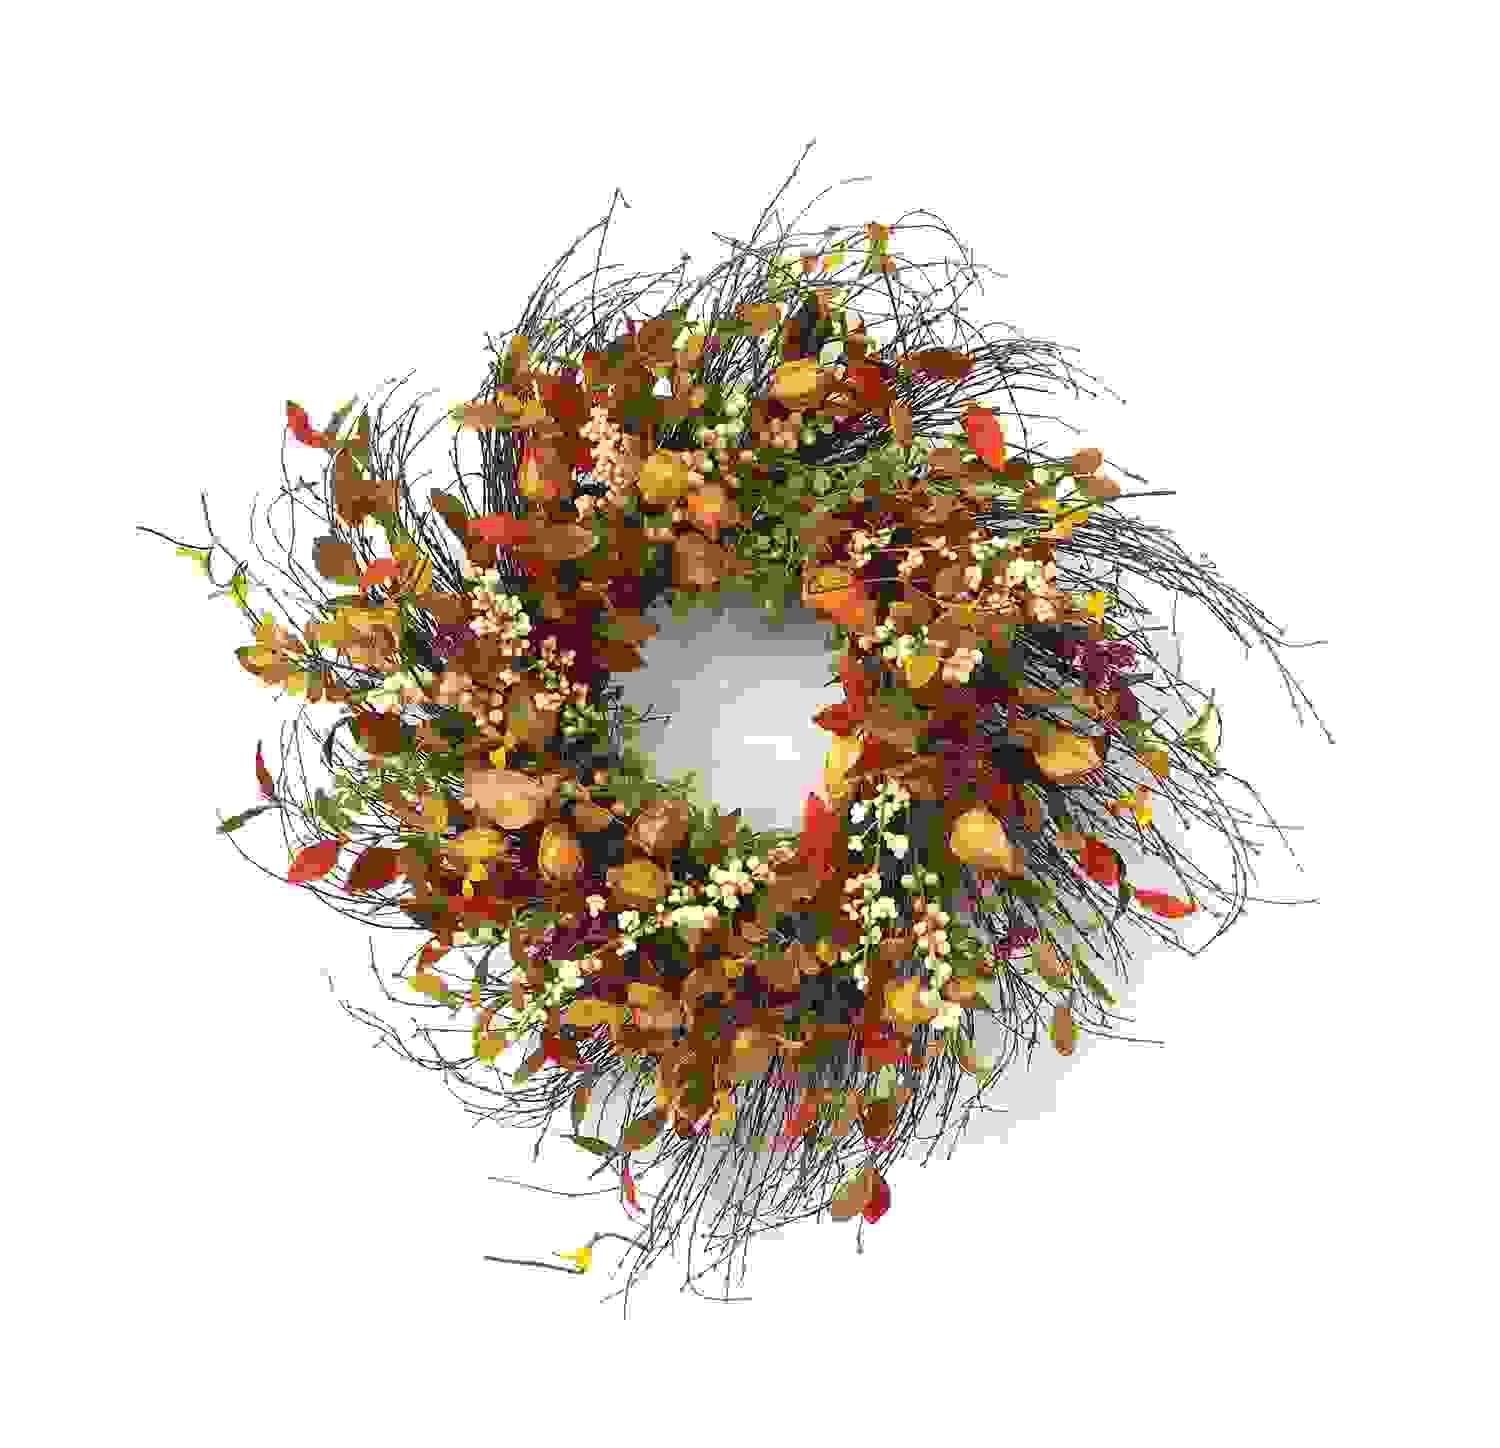 Cape Gooseberry Wreath 20"D Twig/Fabric